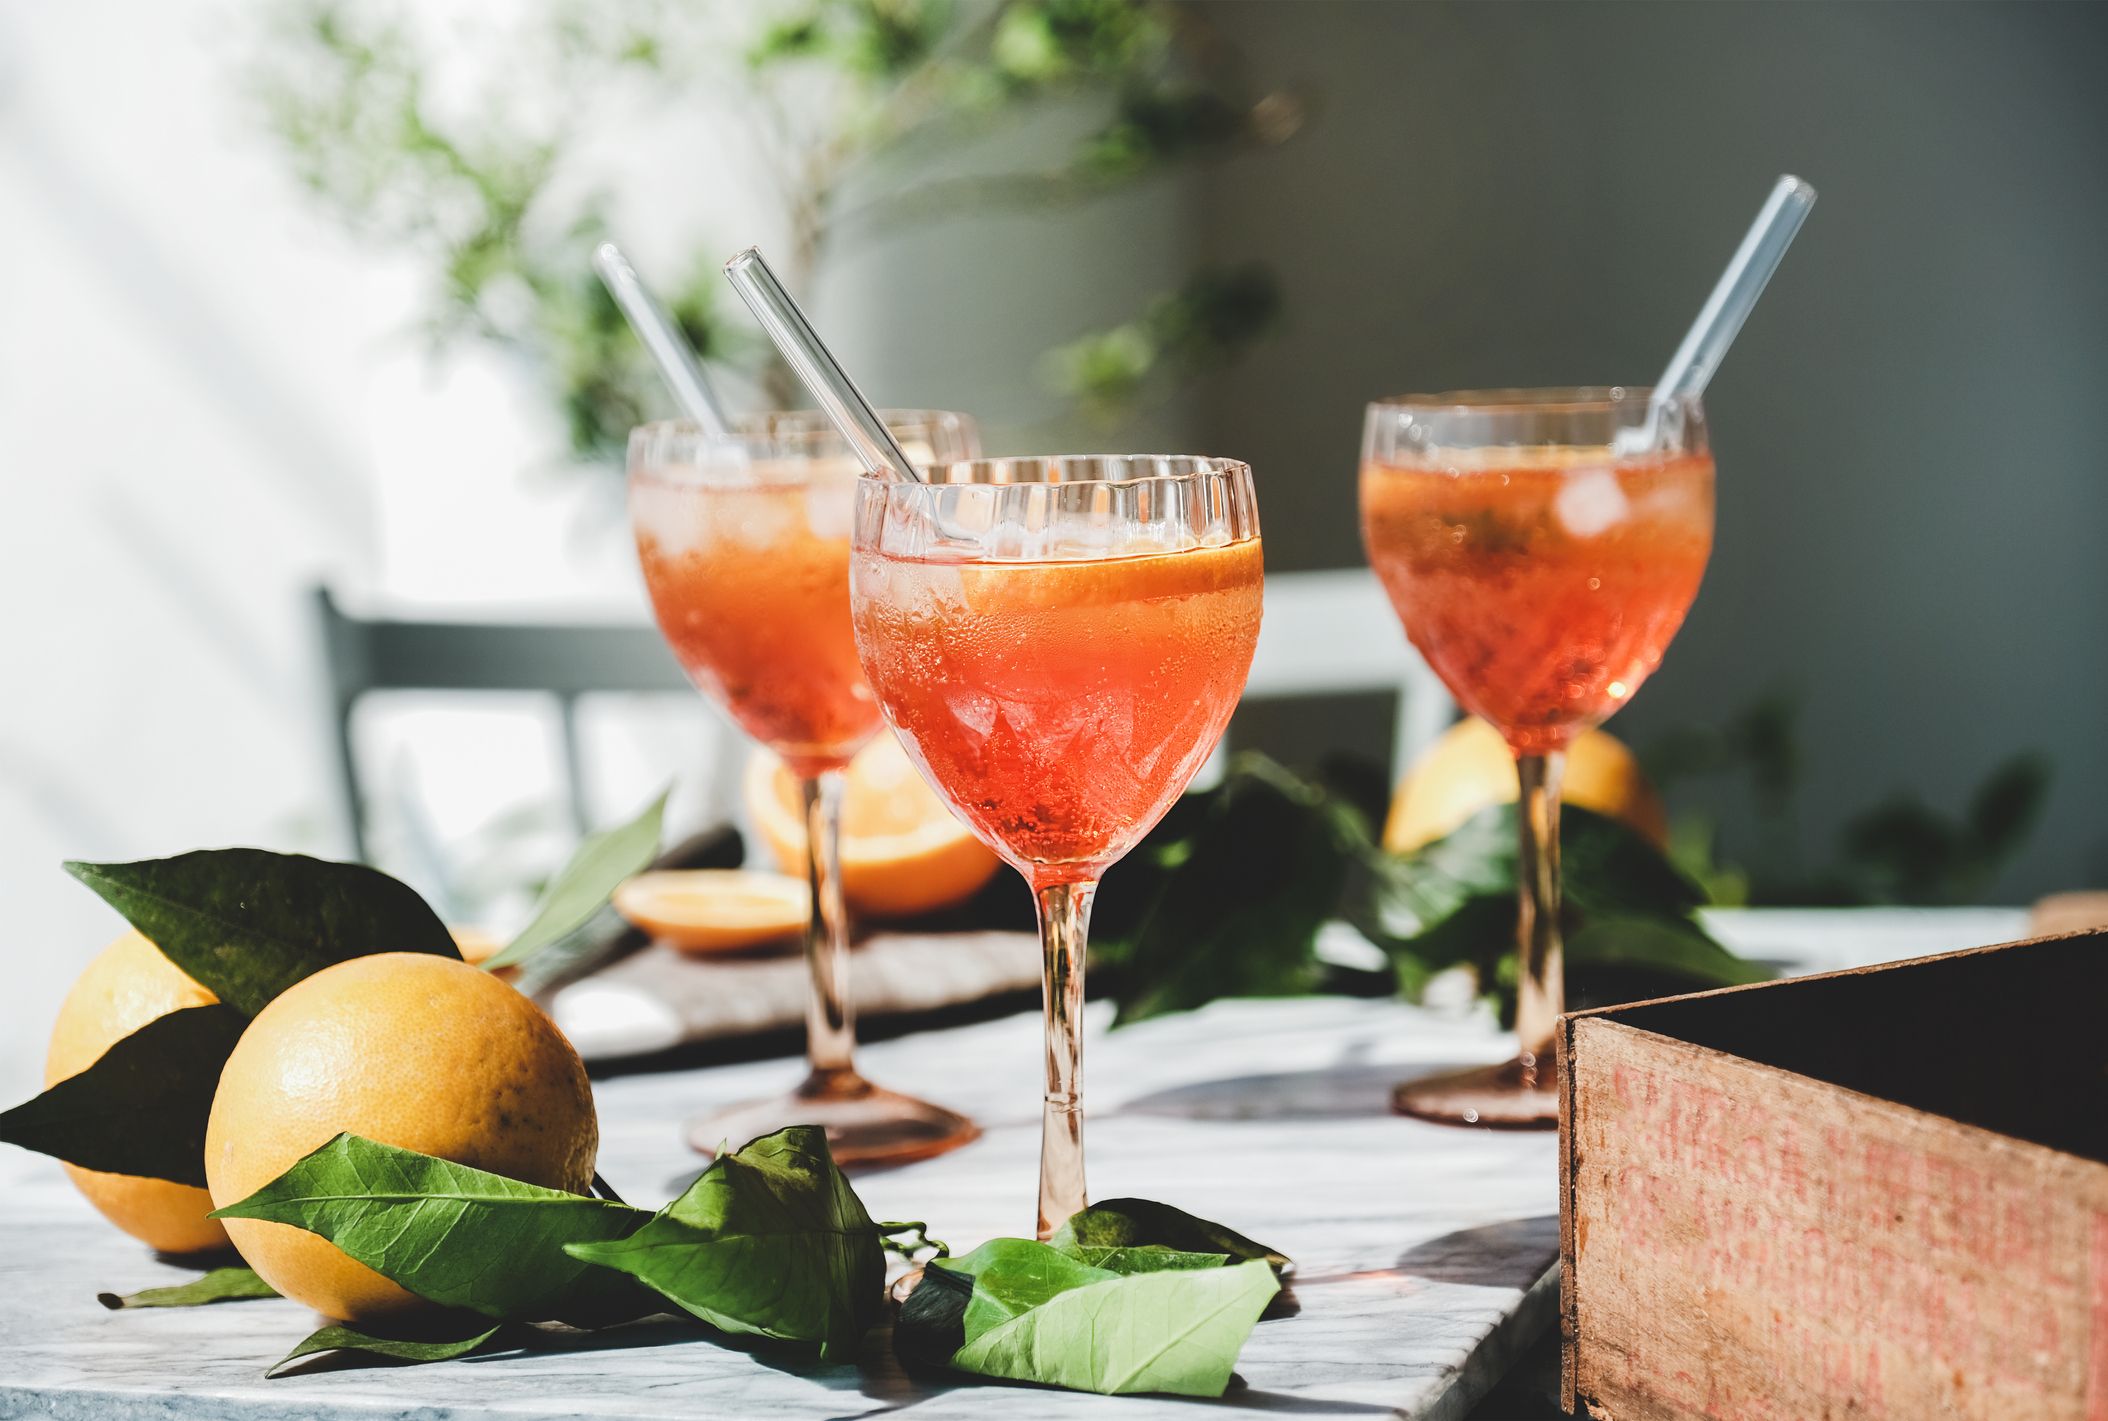 Lidl\'s bestselling orange Bitterol aperitivo is back for summer